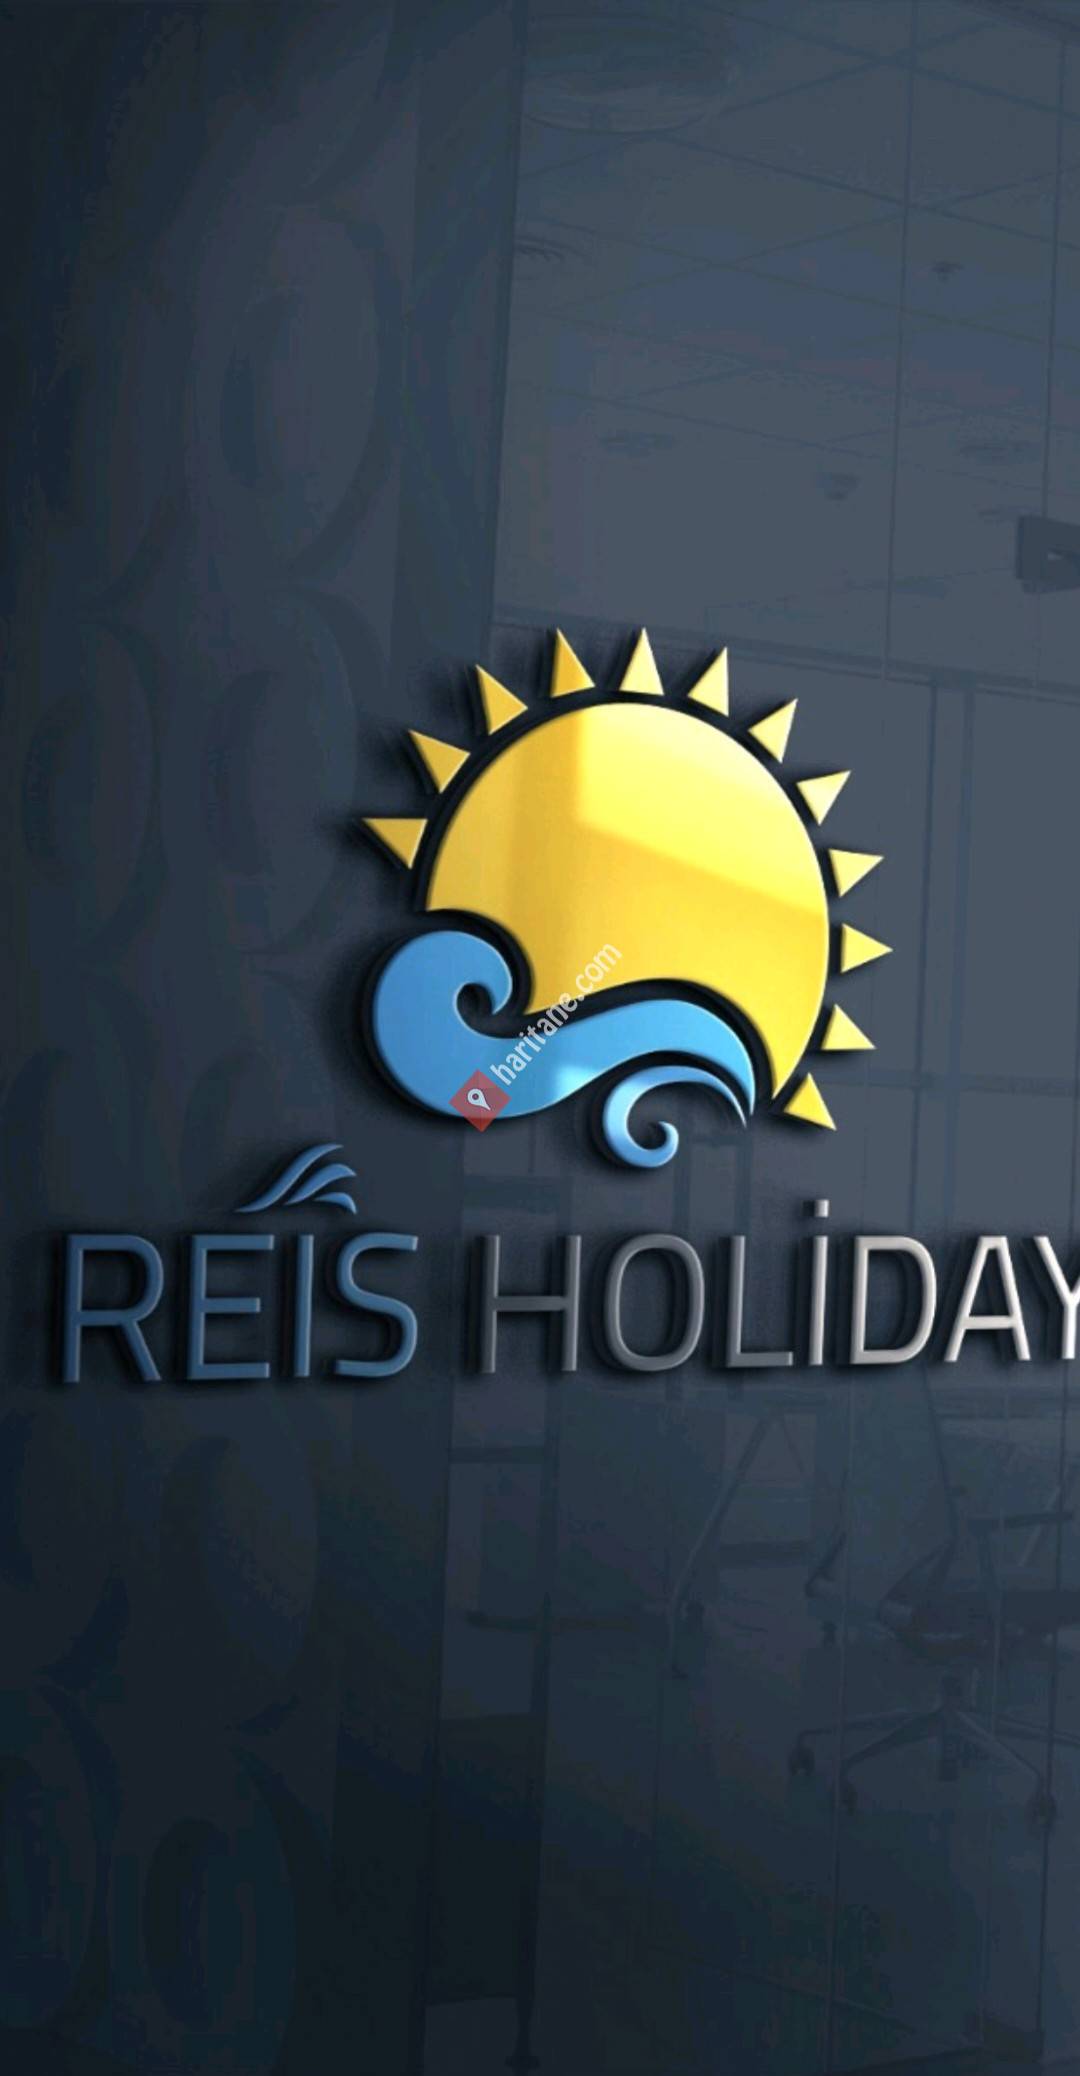 Reis Holiday